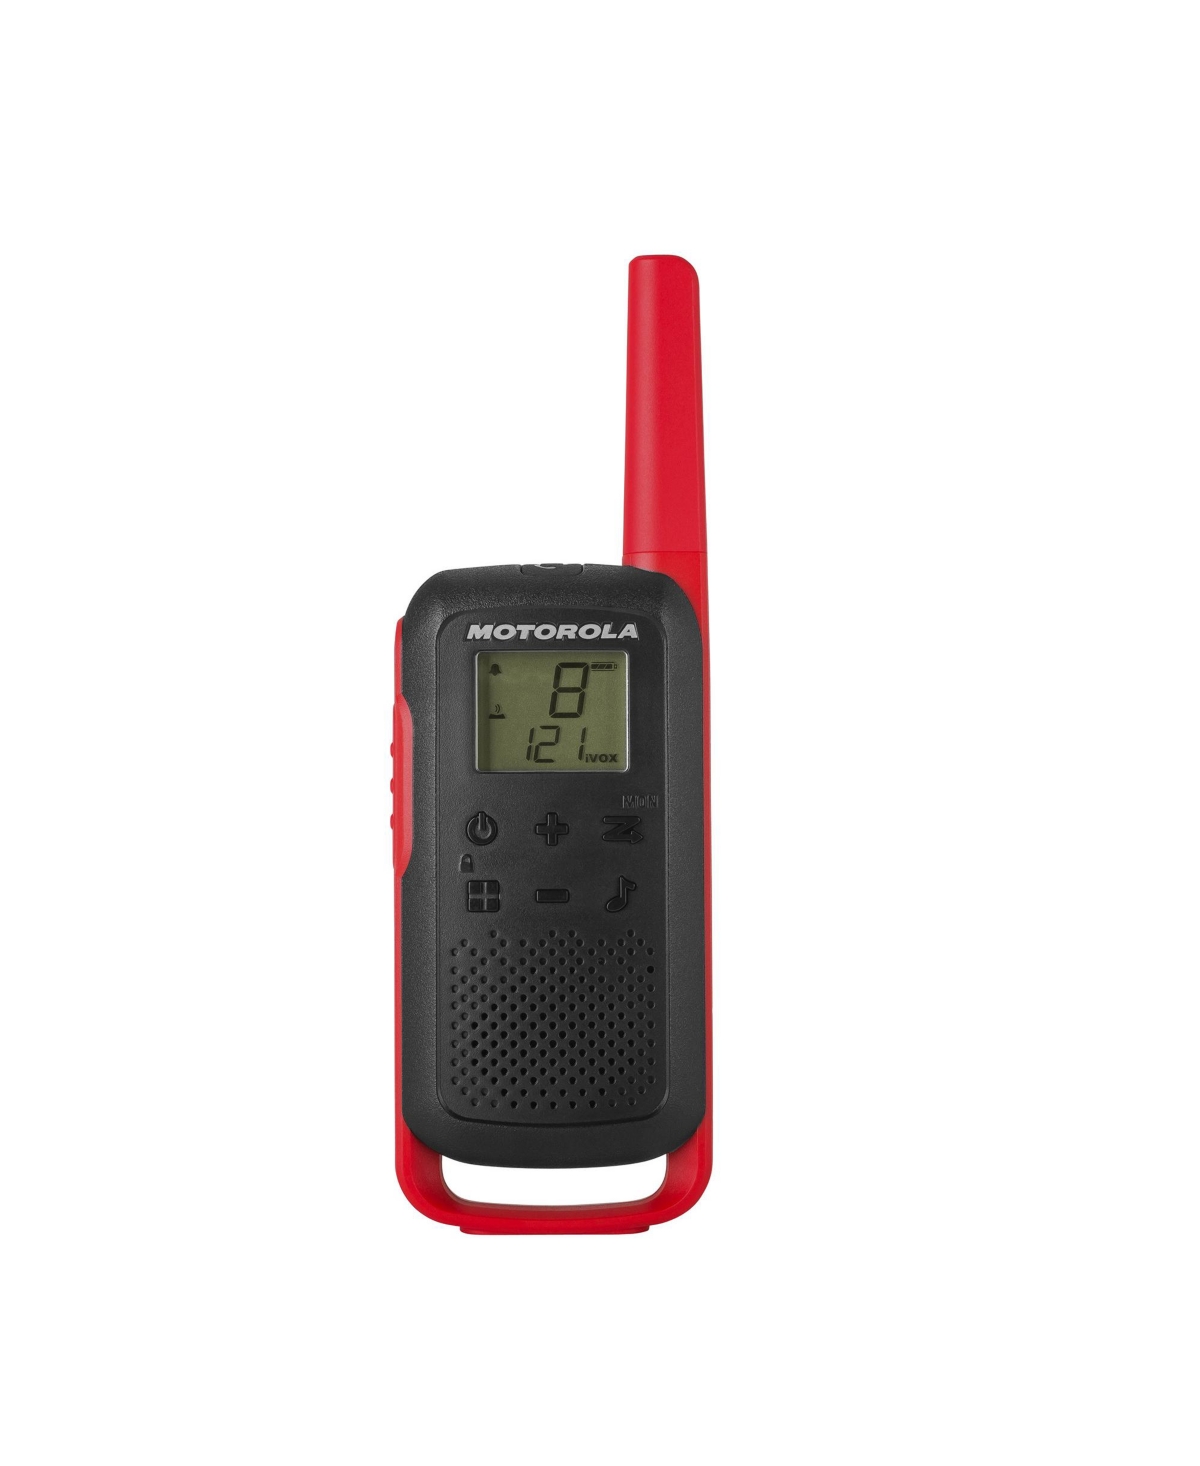 Motorola Solutions T210 20 mi. Two-Way Radio Black/Red 2-Pack - Red